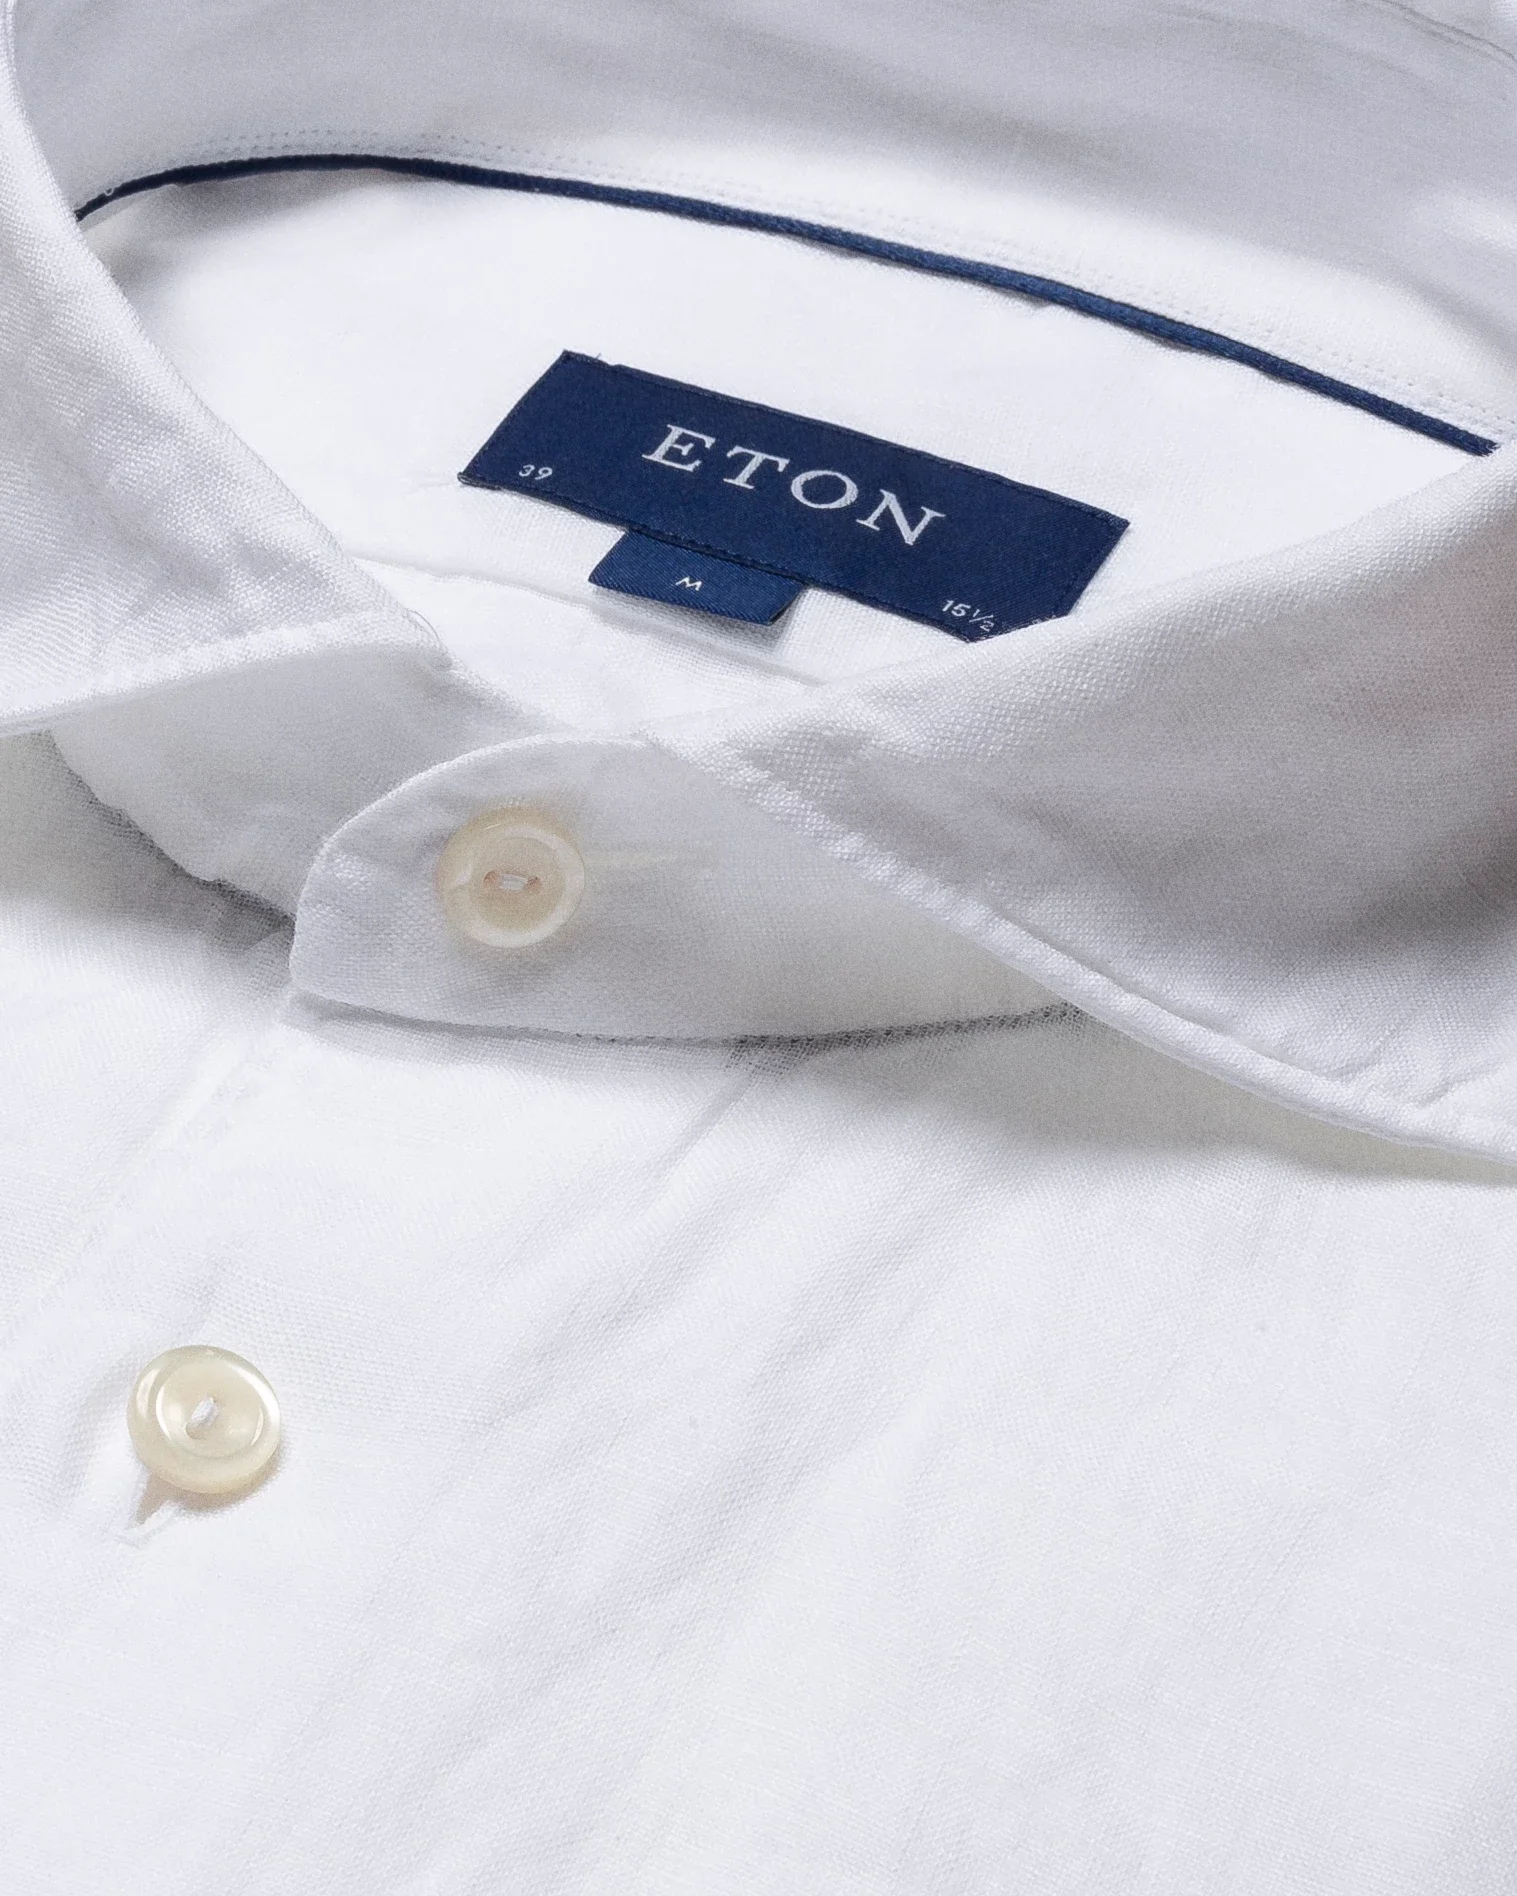 Eton - white linen shirt wide spread